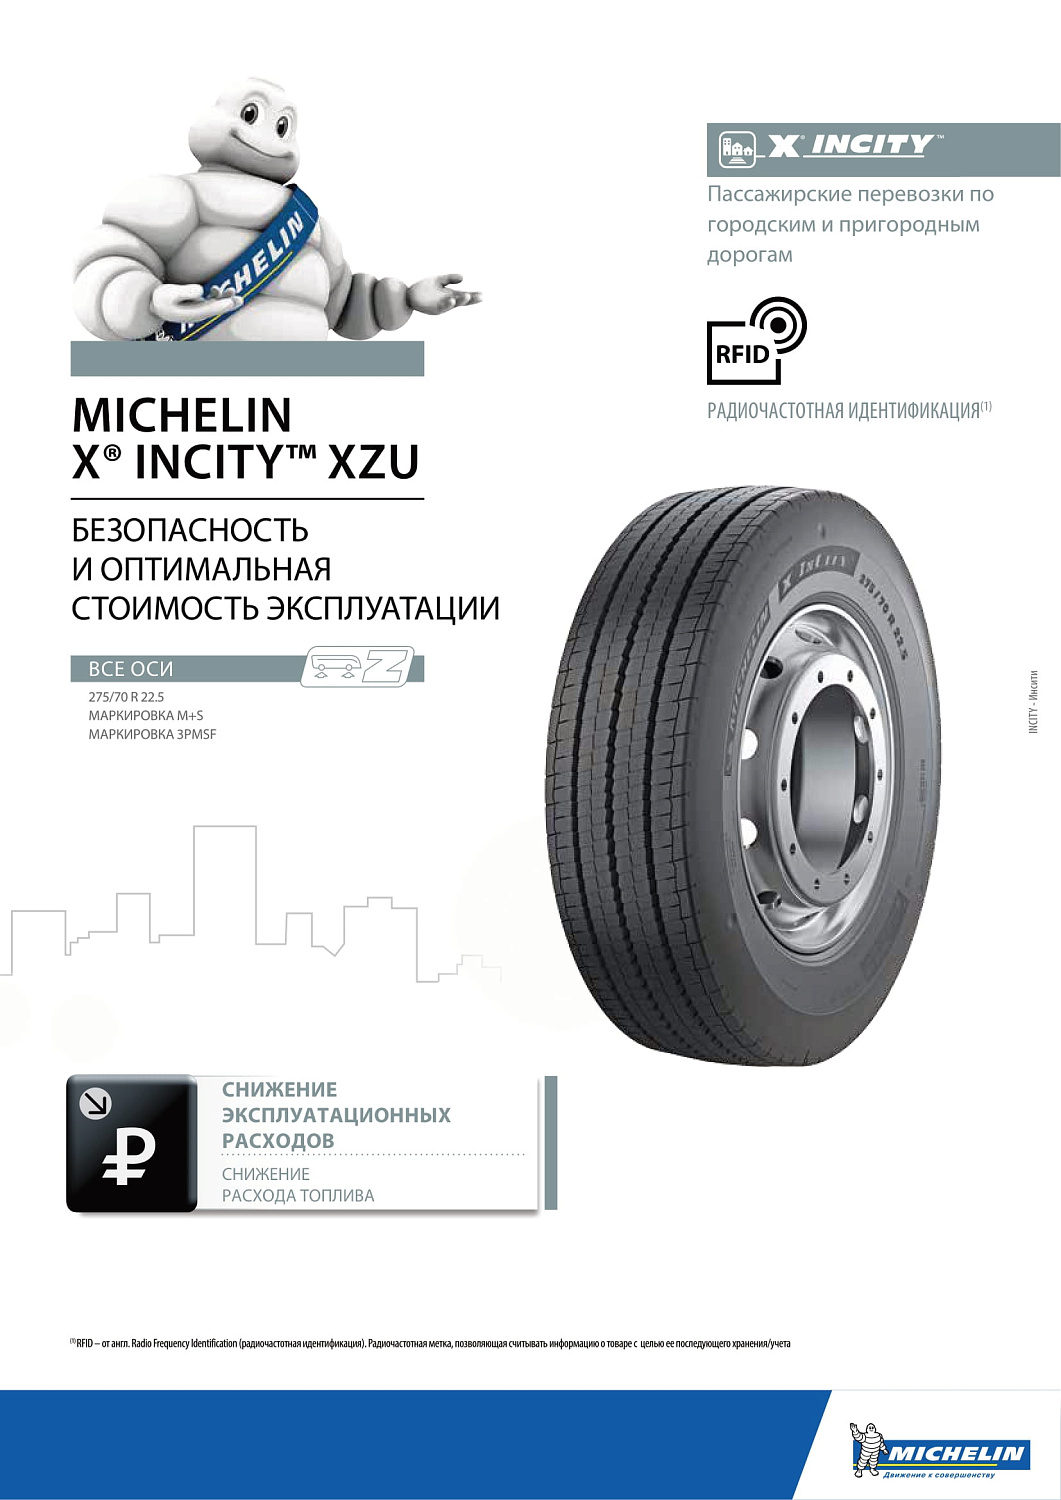 Michelin X Incity XZU 275/70 R22.5 TL